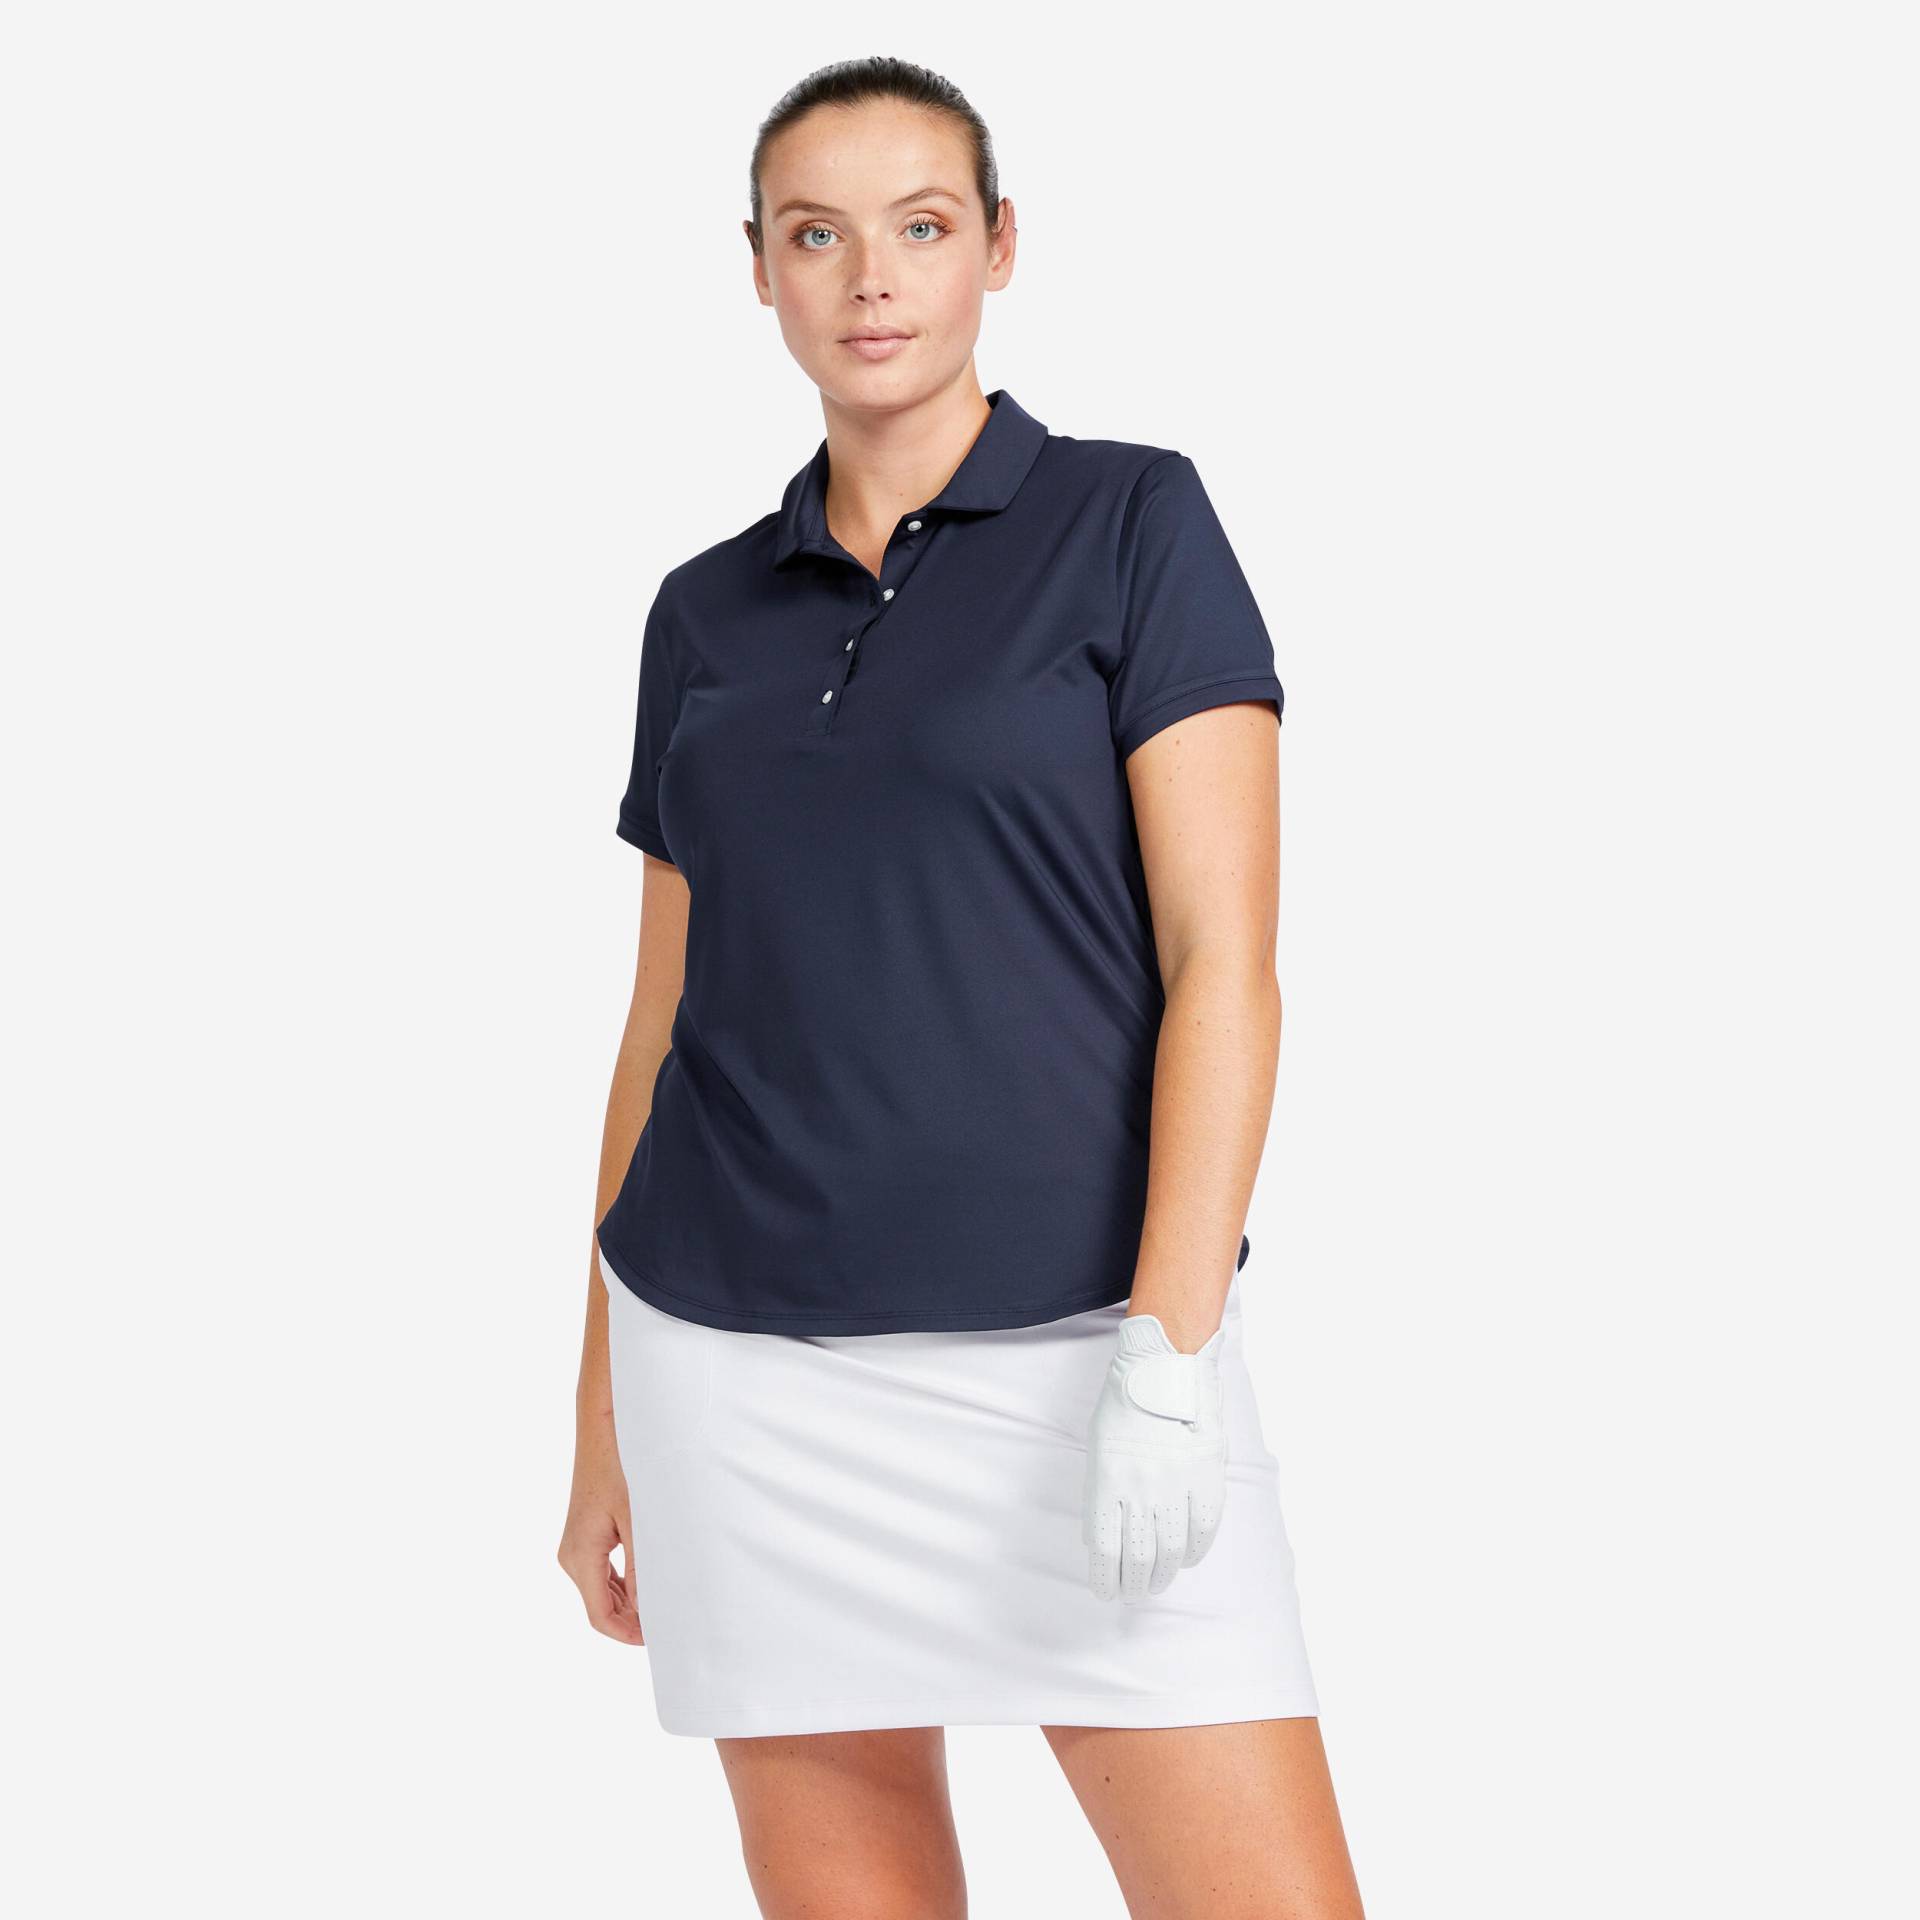 Damen Golf Poloshirt kurzarm - WW500 dunkelblau von INESIS